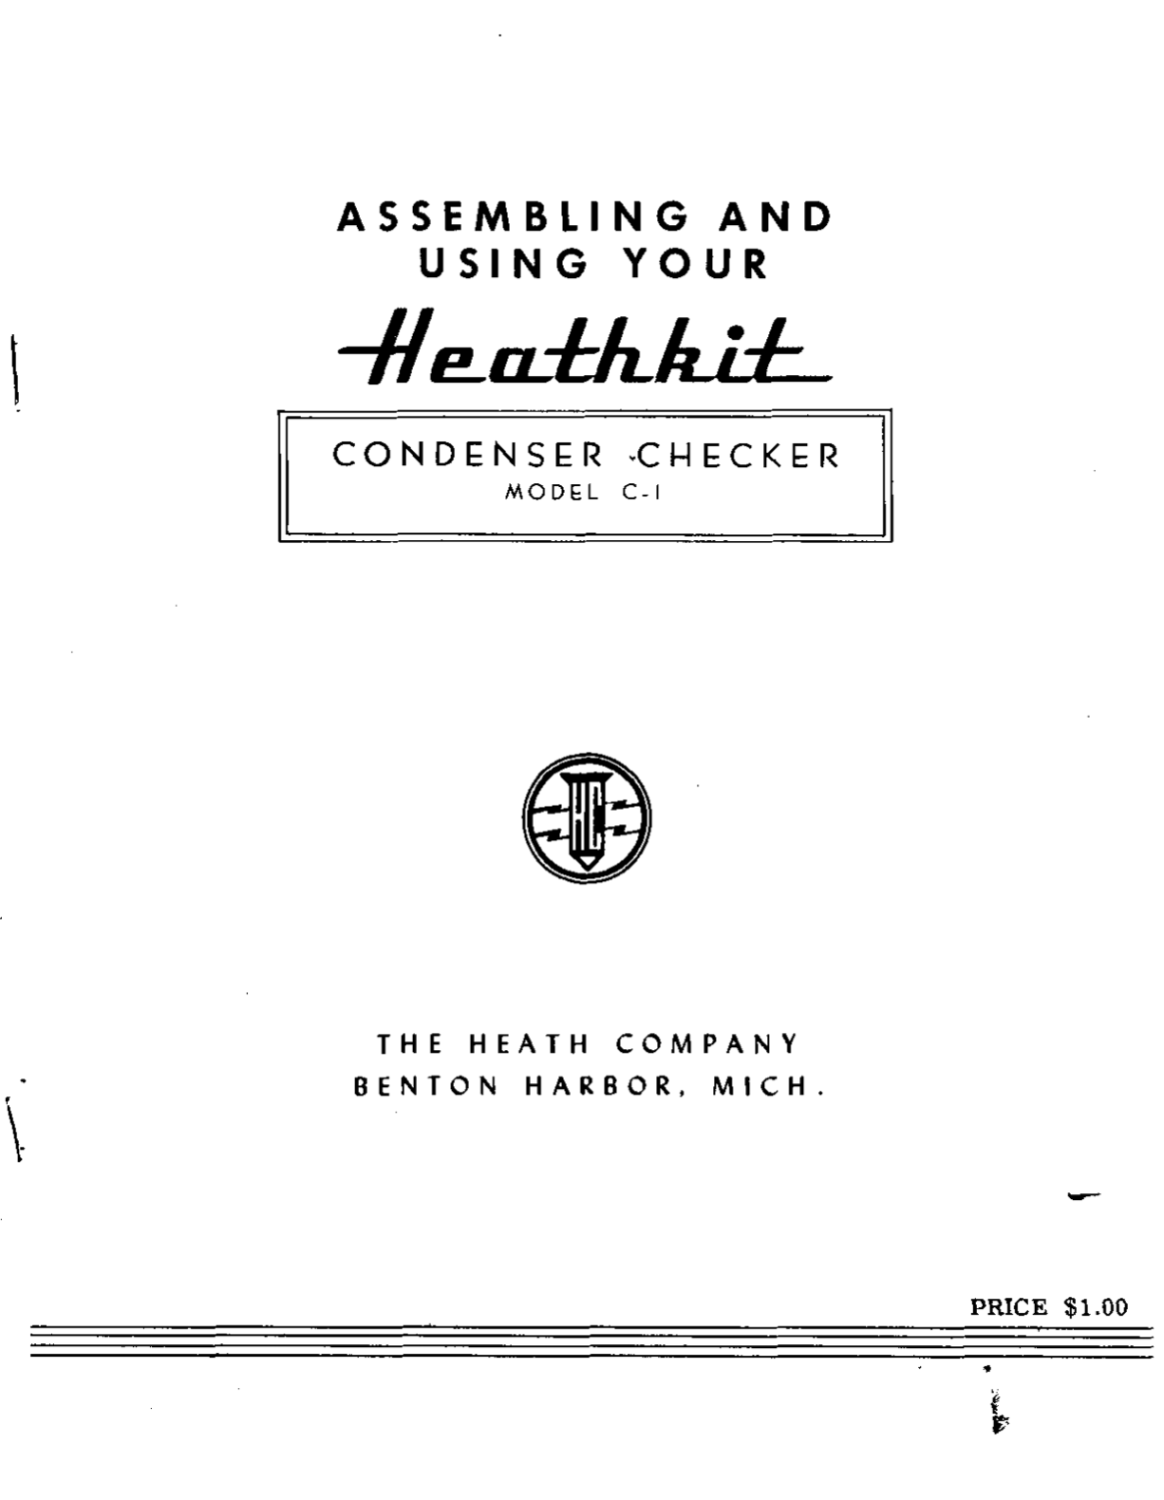 Heathkit C-1 Condenser Checker - Assembly Instructions